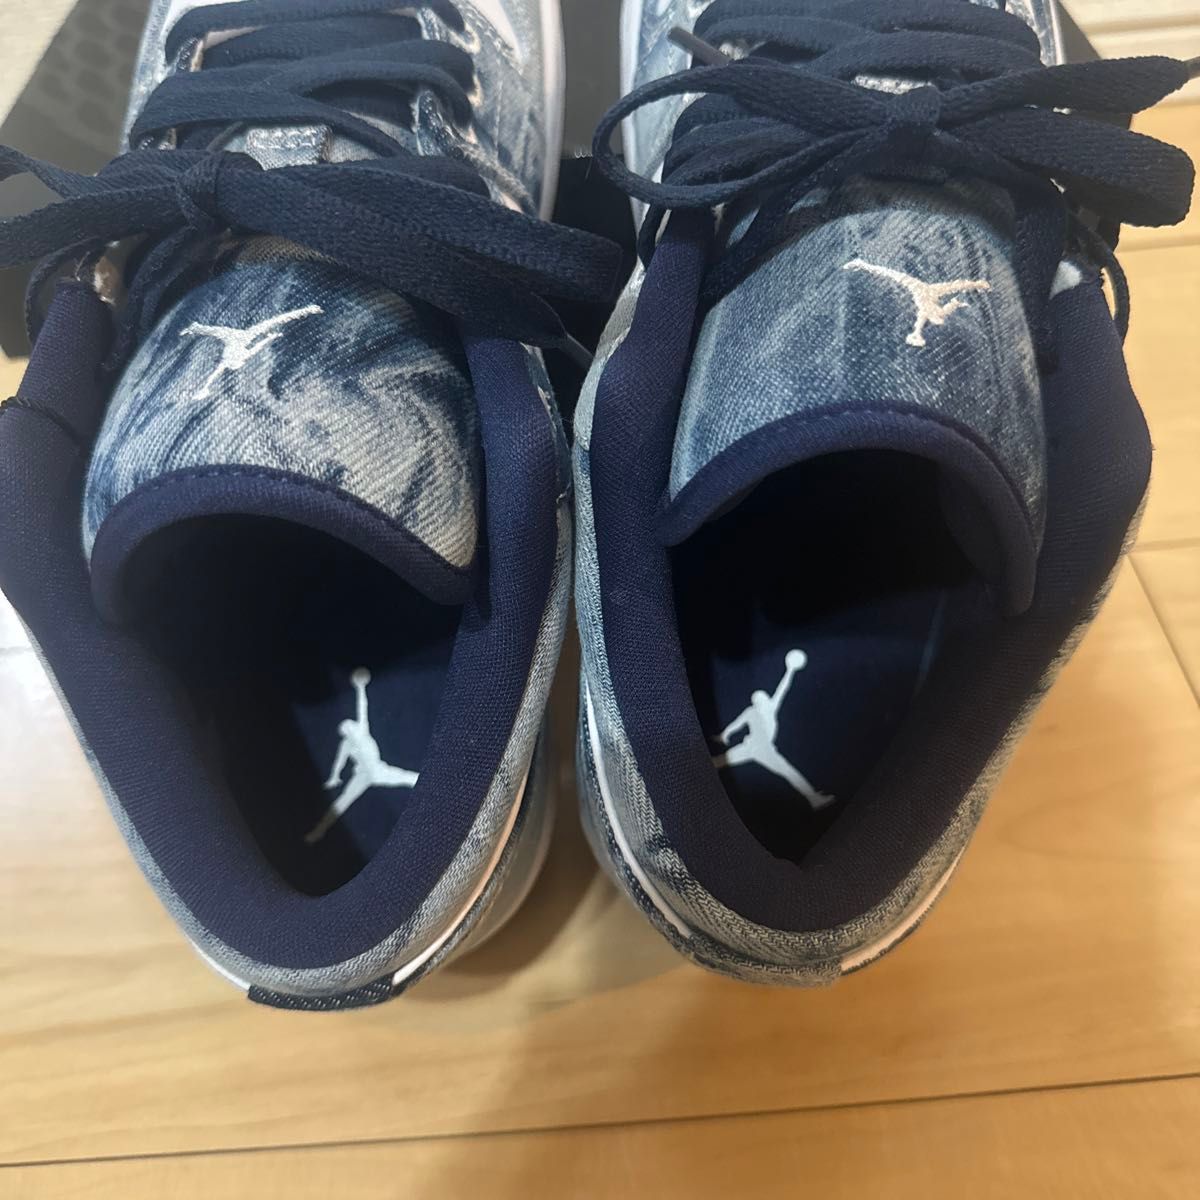 Nike Air Jordan 1 Low "Washed Denim"